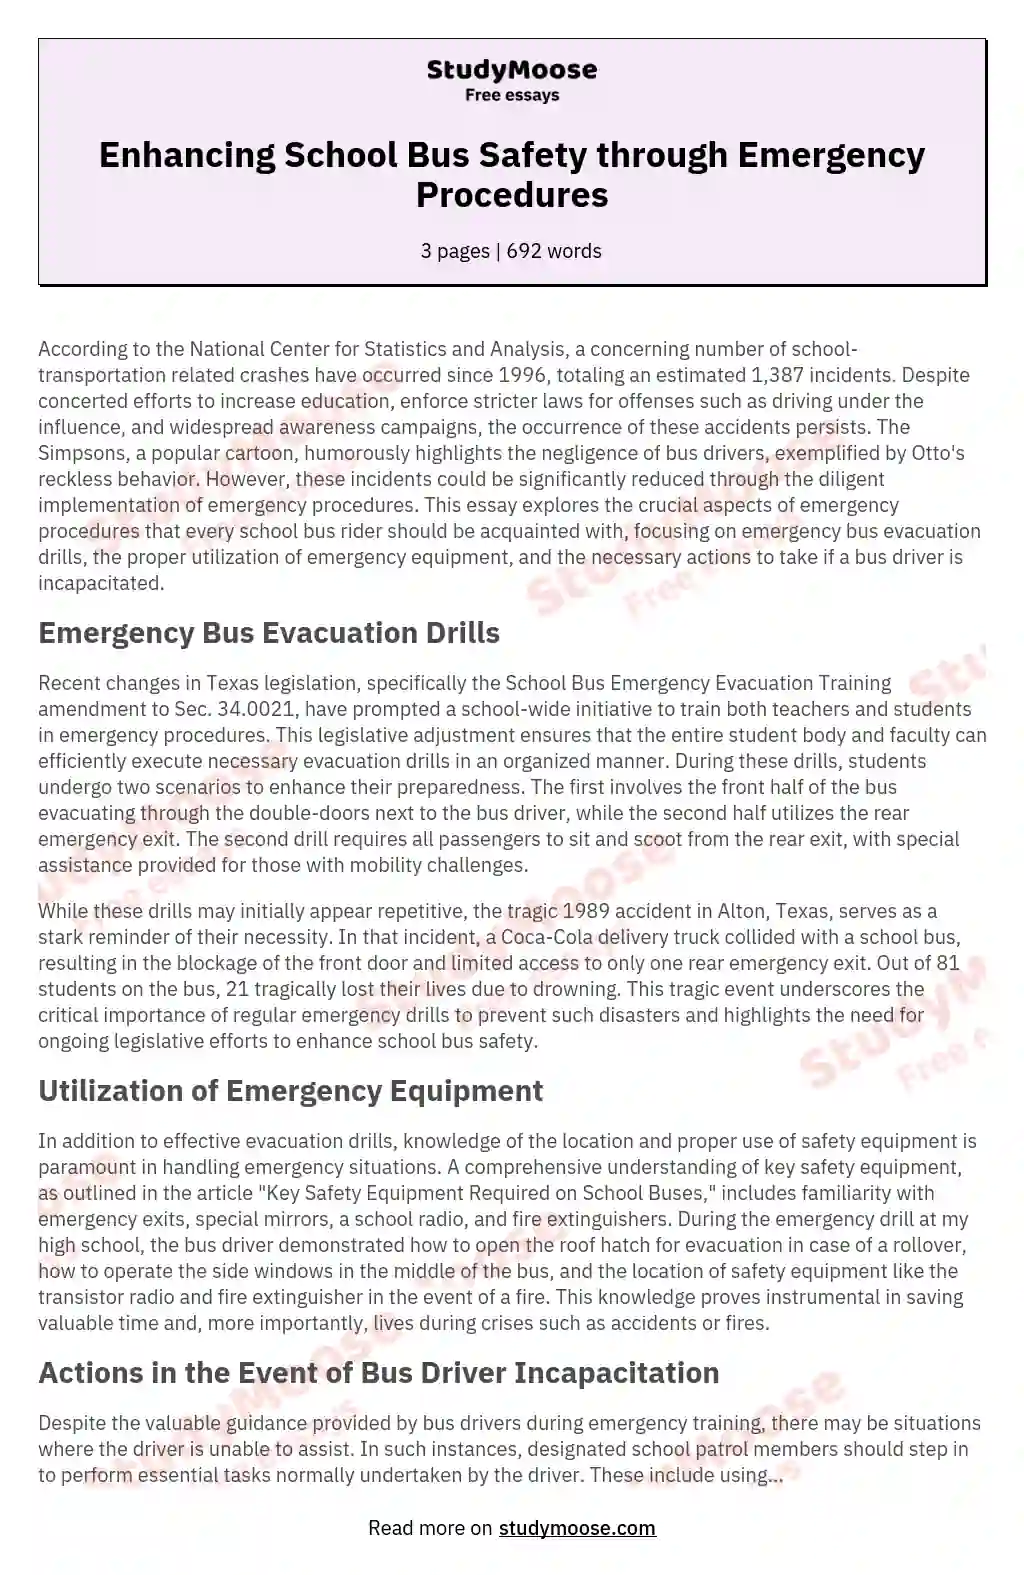 Enhancing School Bus Safety through Emergency Procedures essay